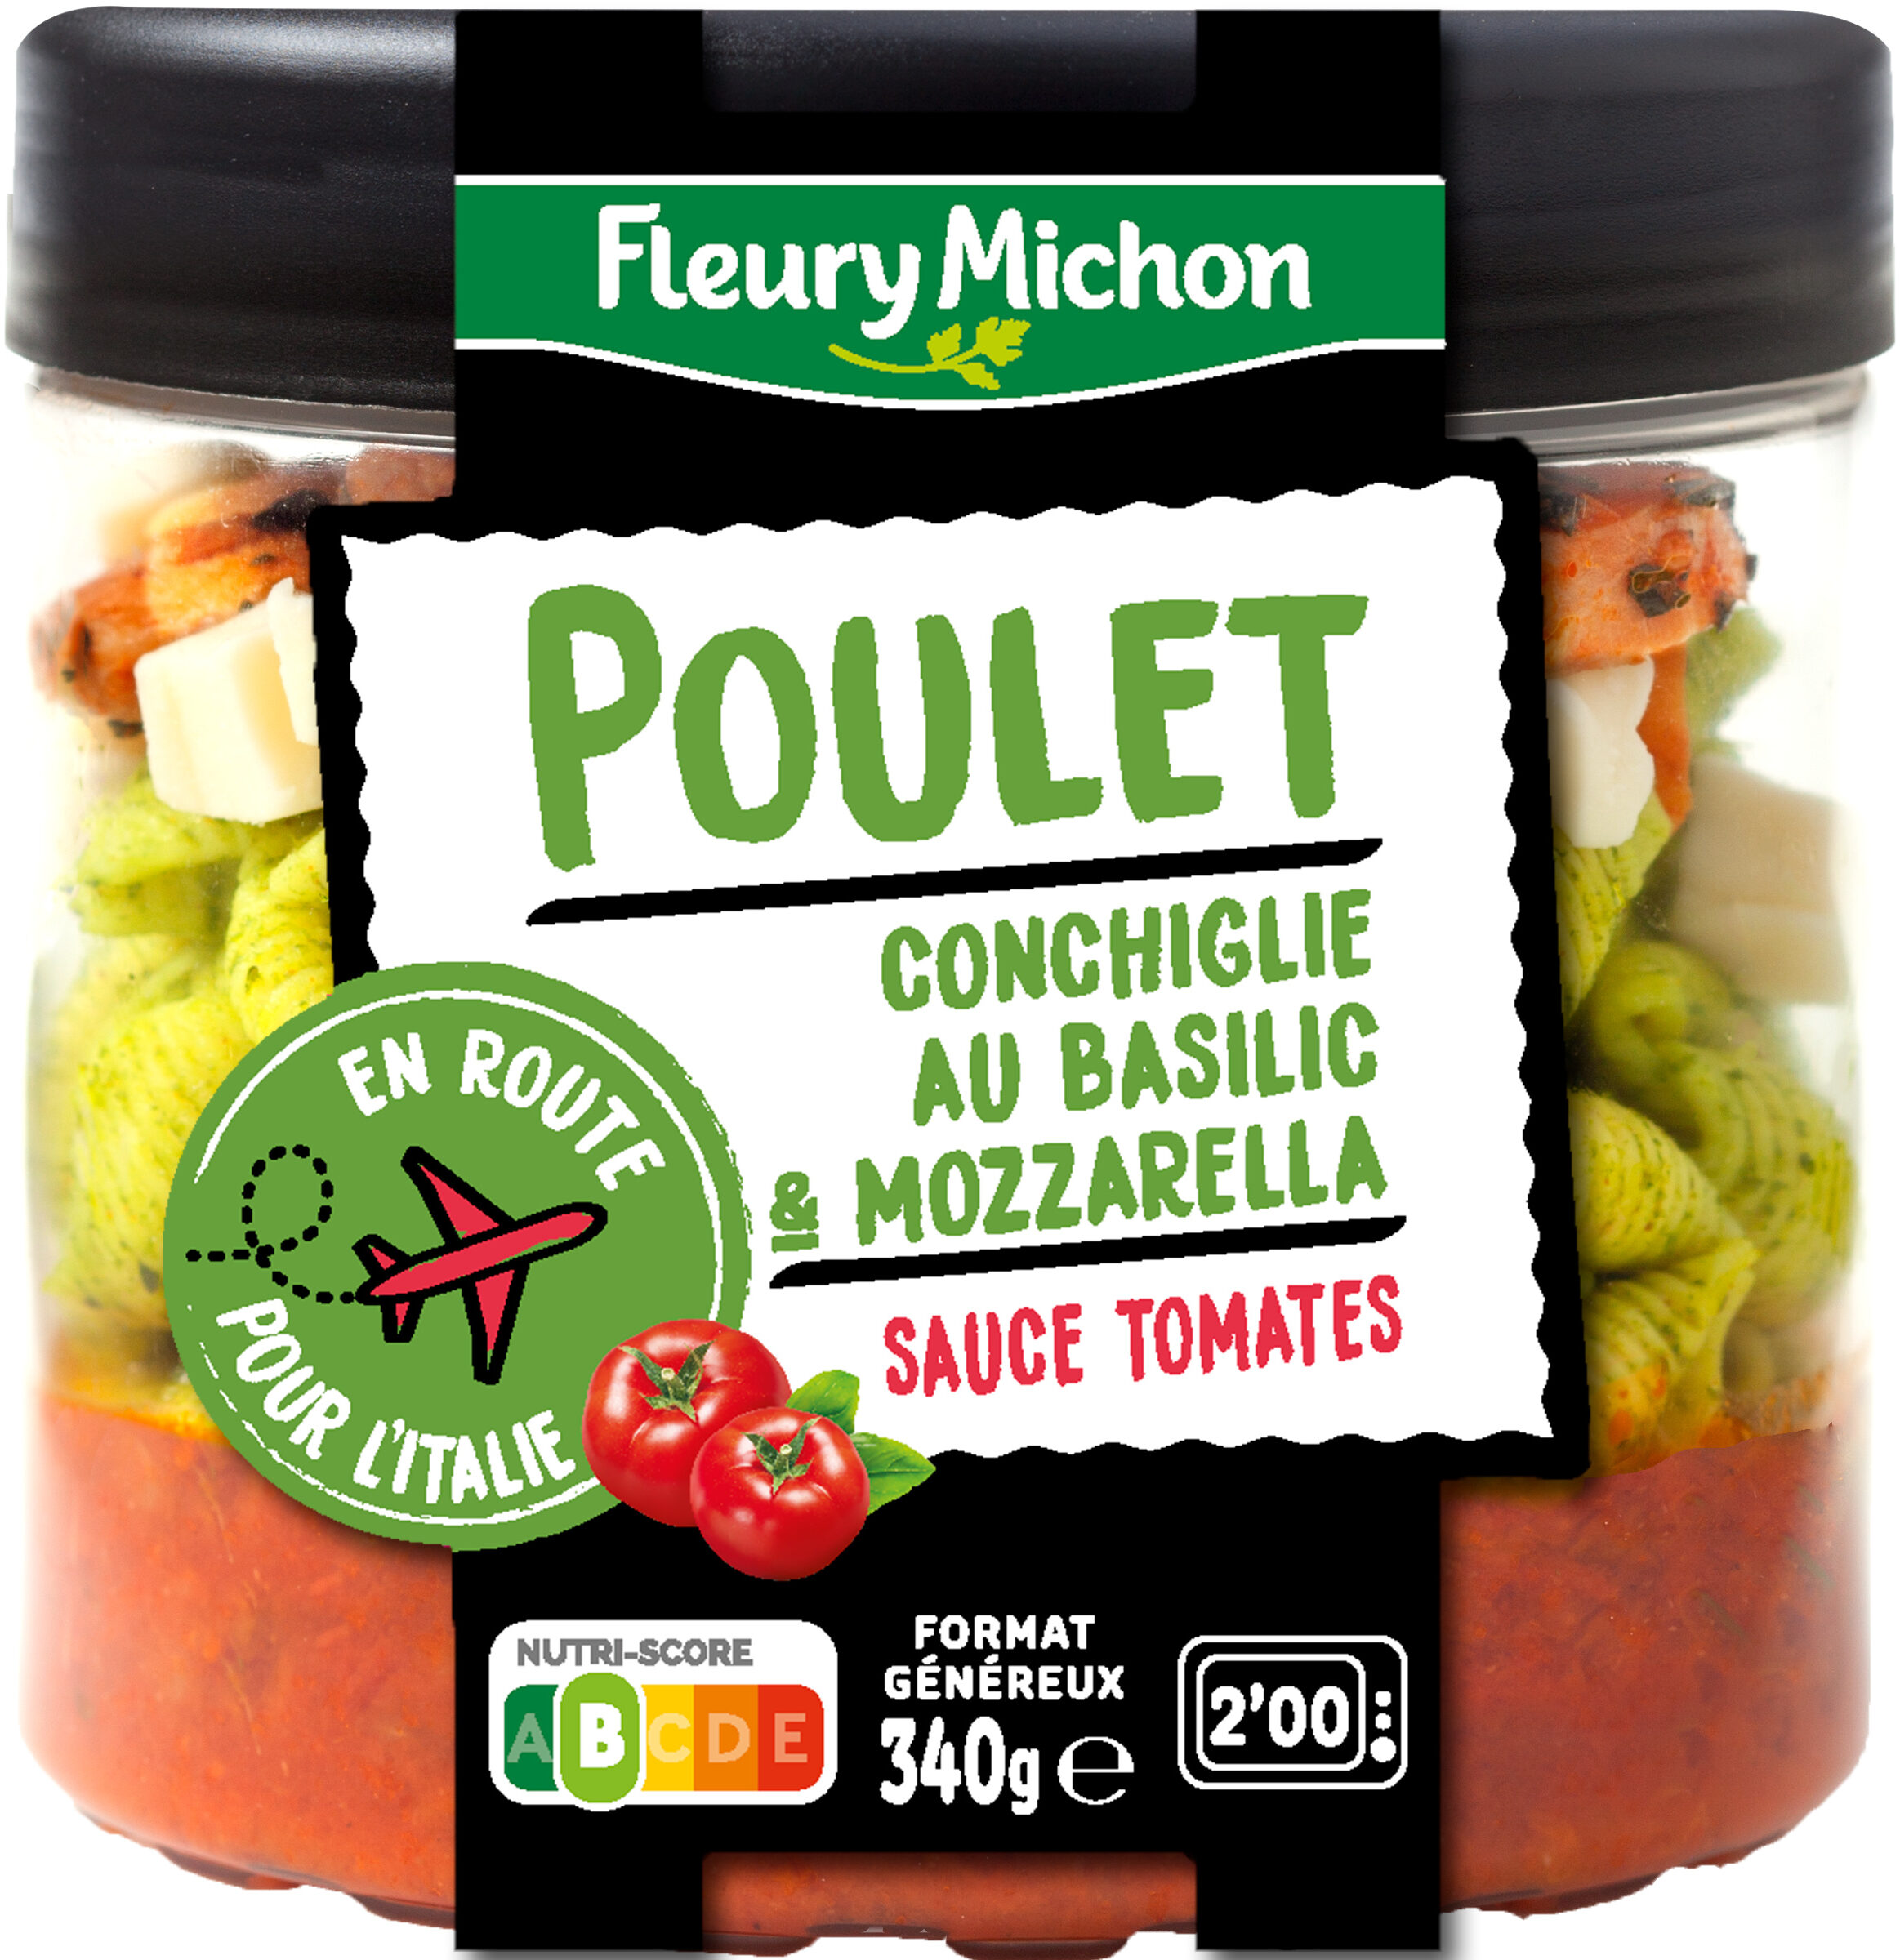 Poulet, conchiglie au basilic & mozzarella, sauce tomates - Produit